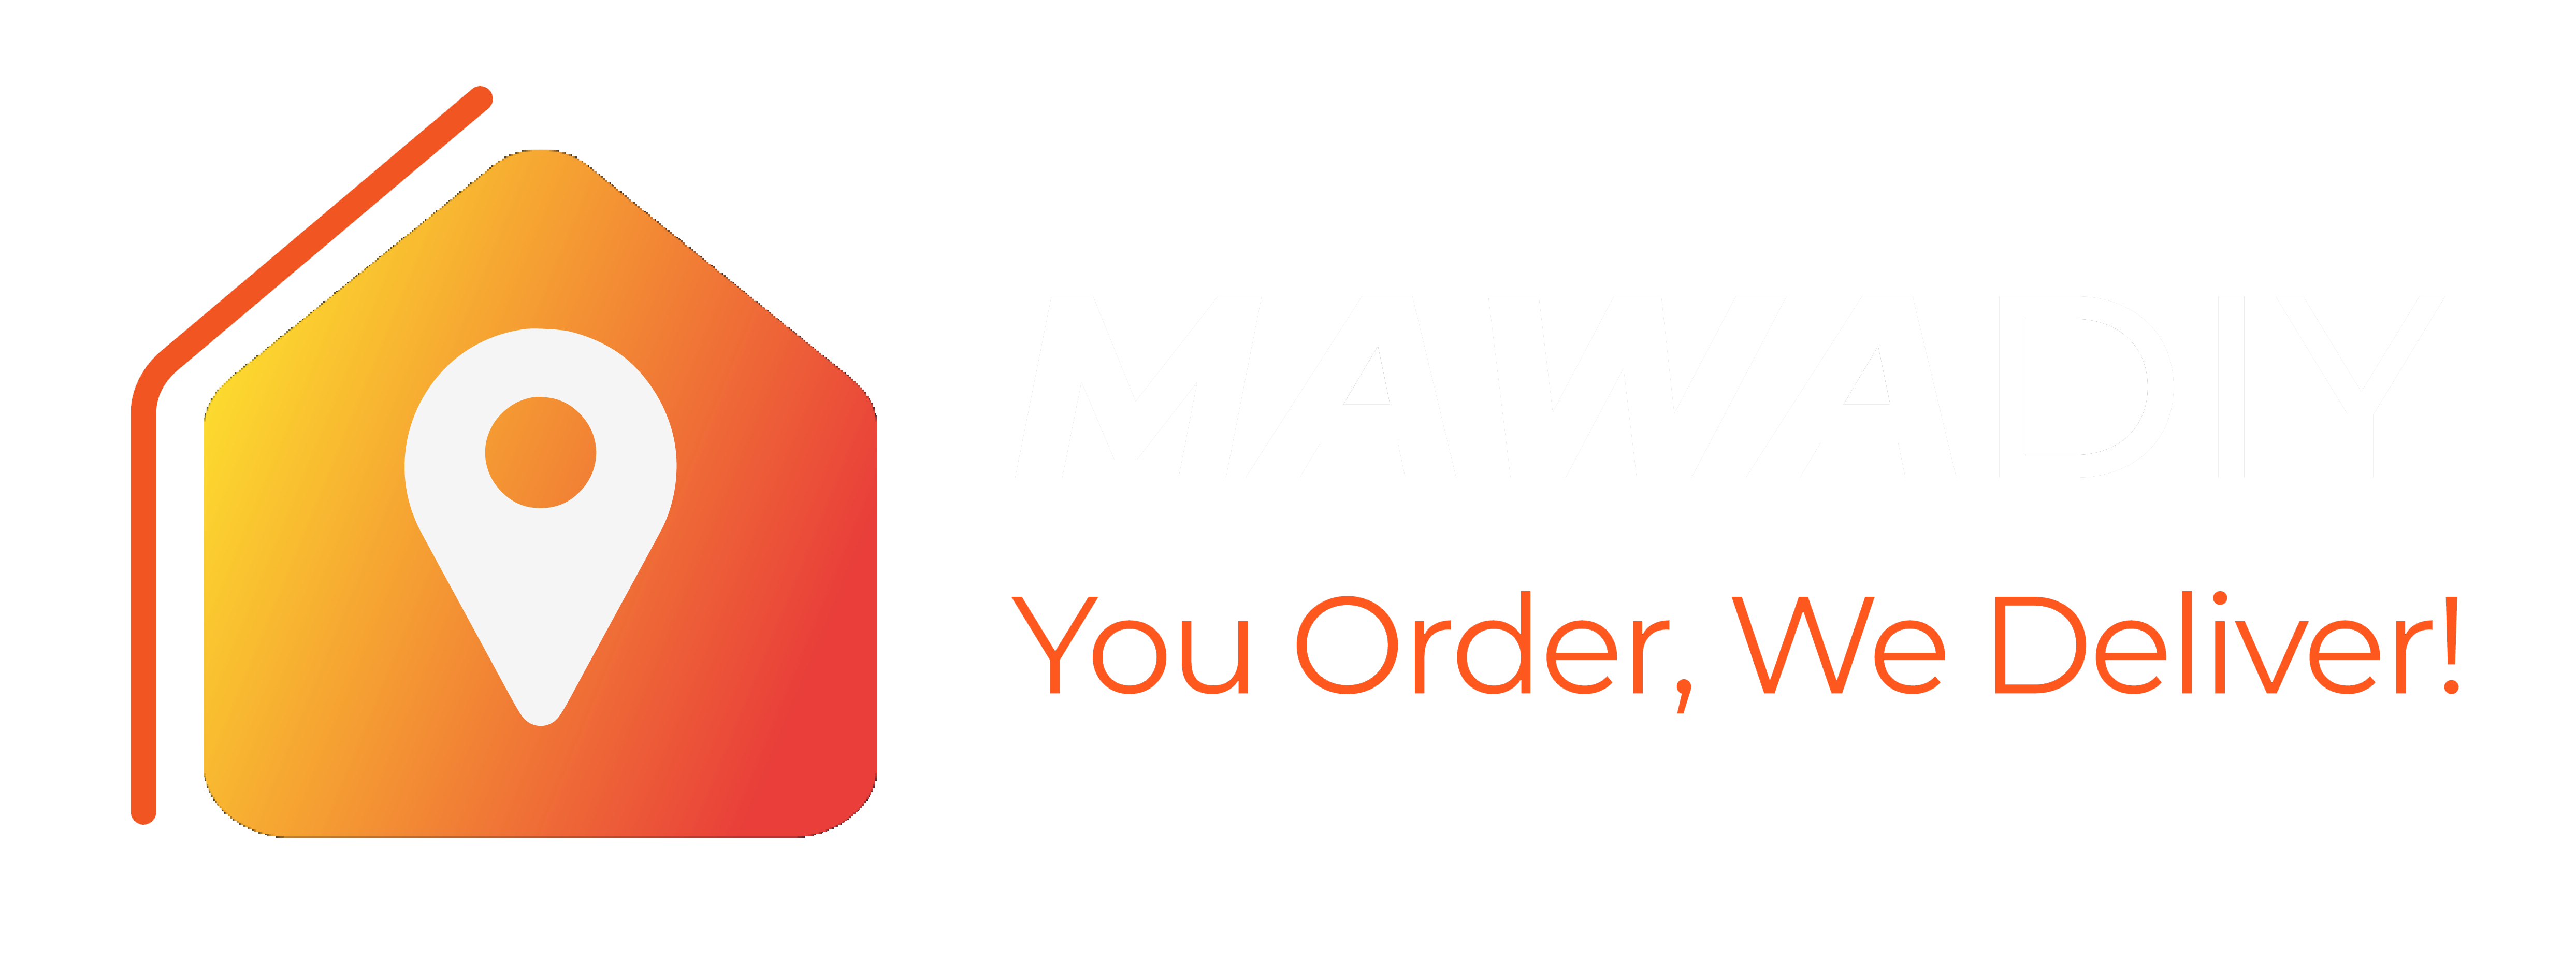 mawadiy-logo